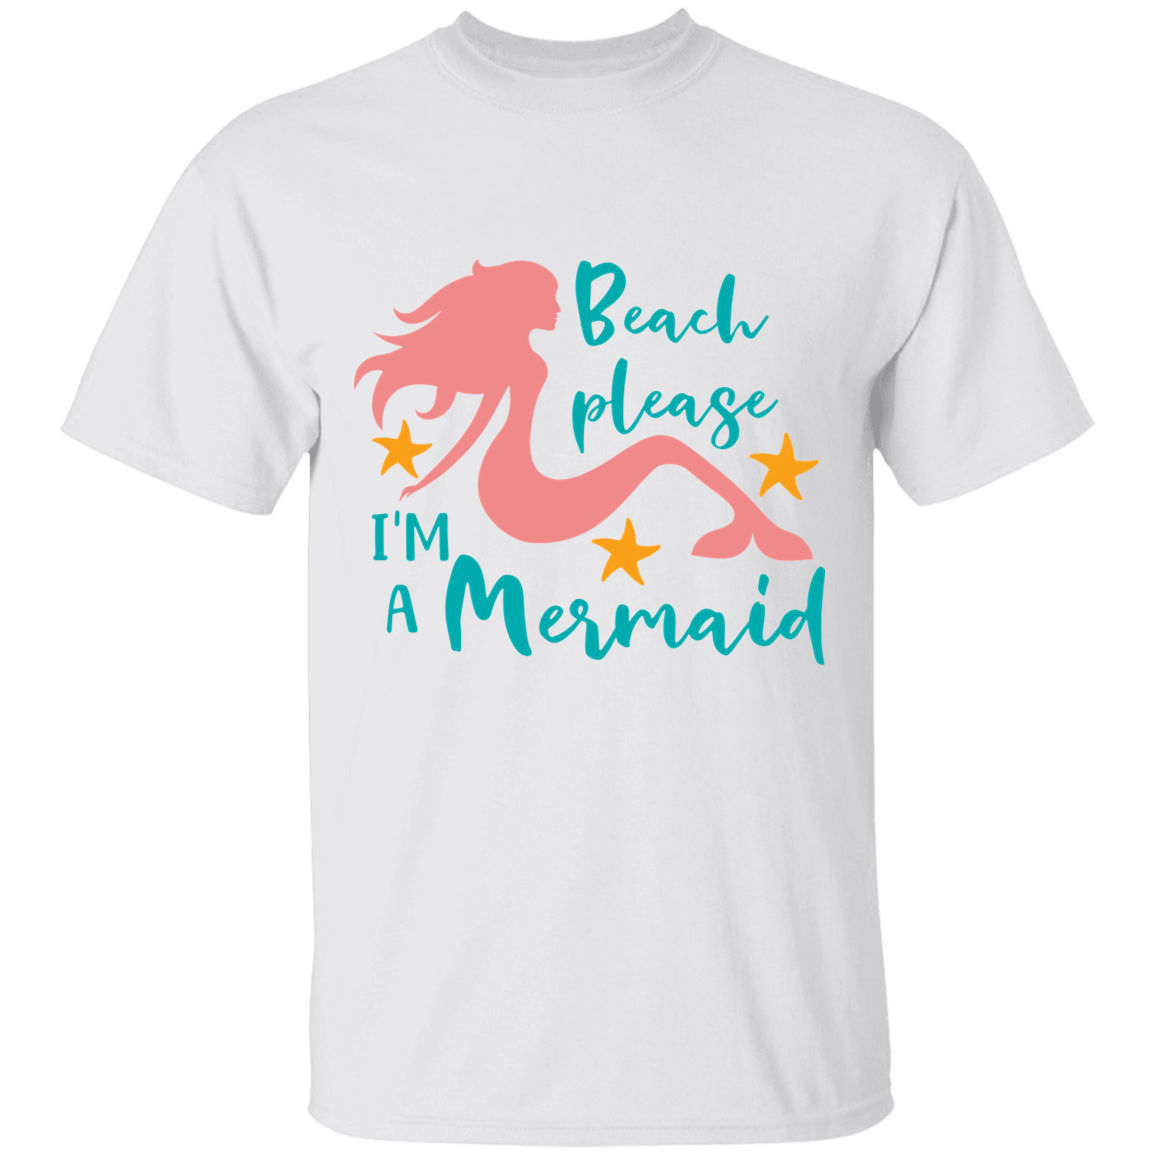 Mermaid t'shirt